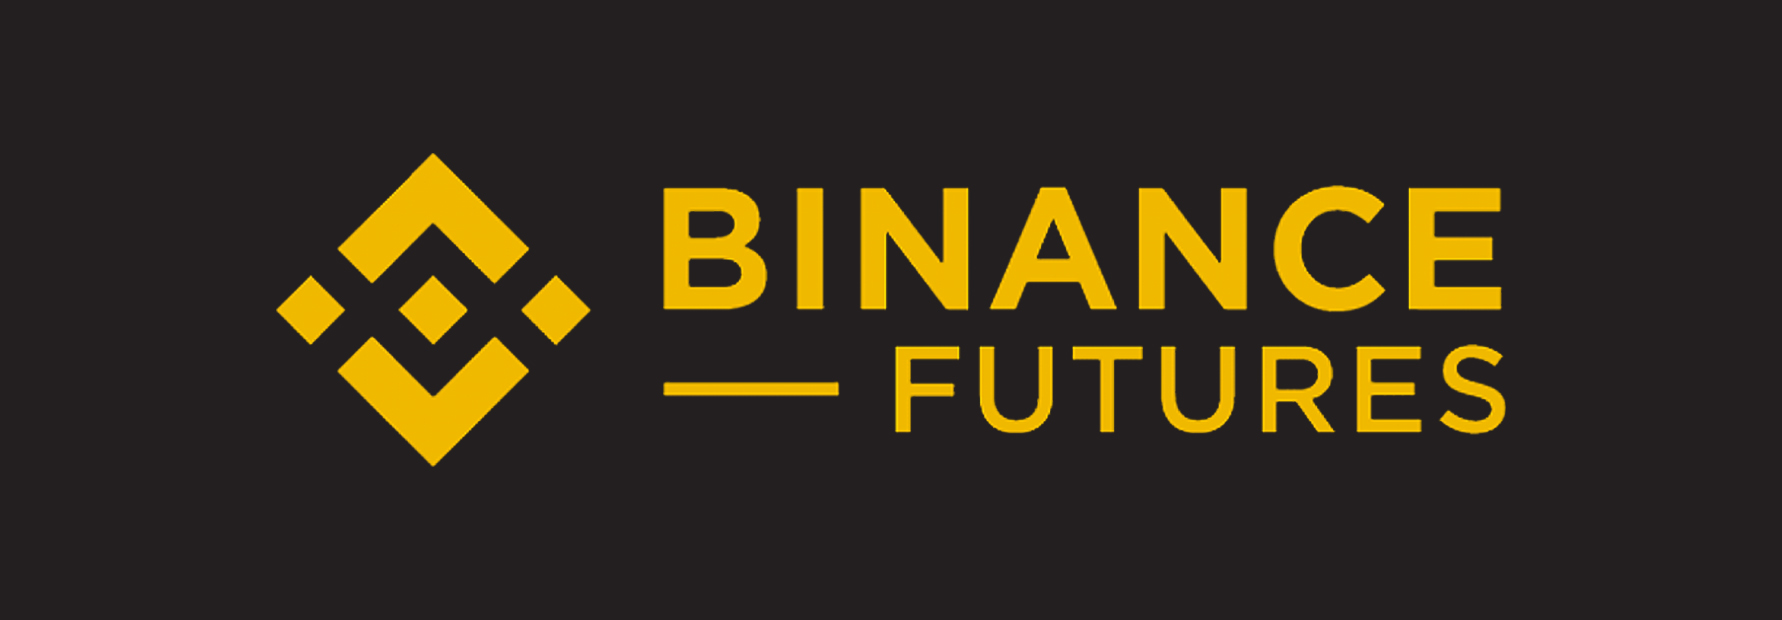 binance_futures-logo.jpg